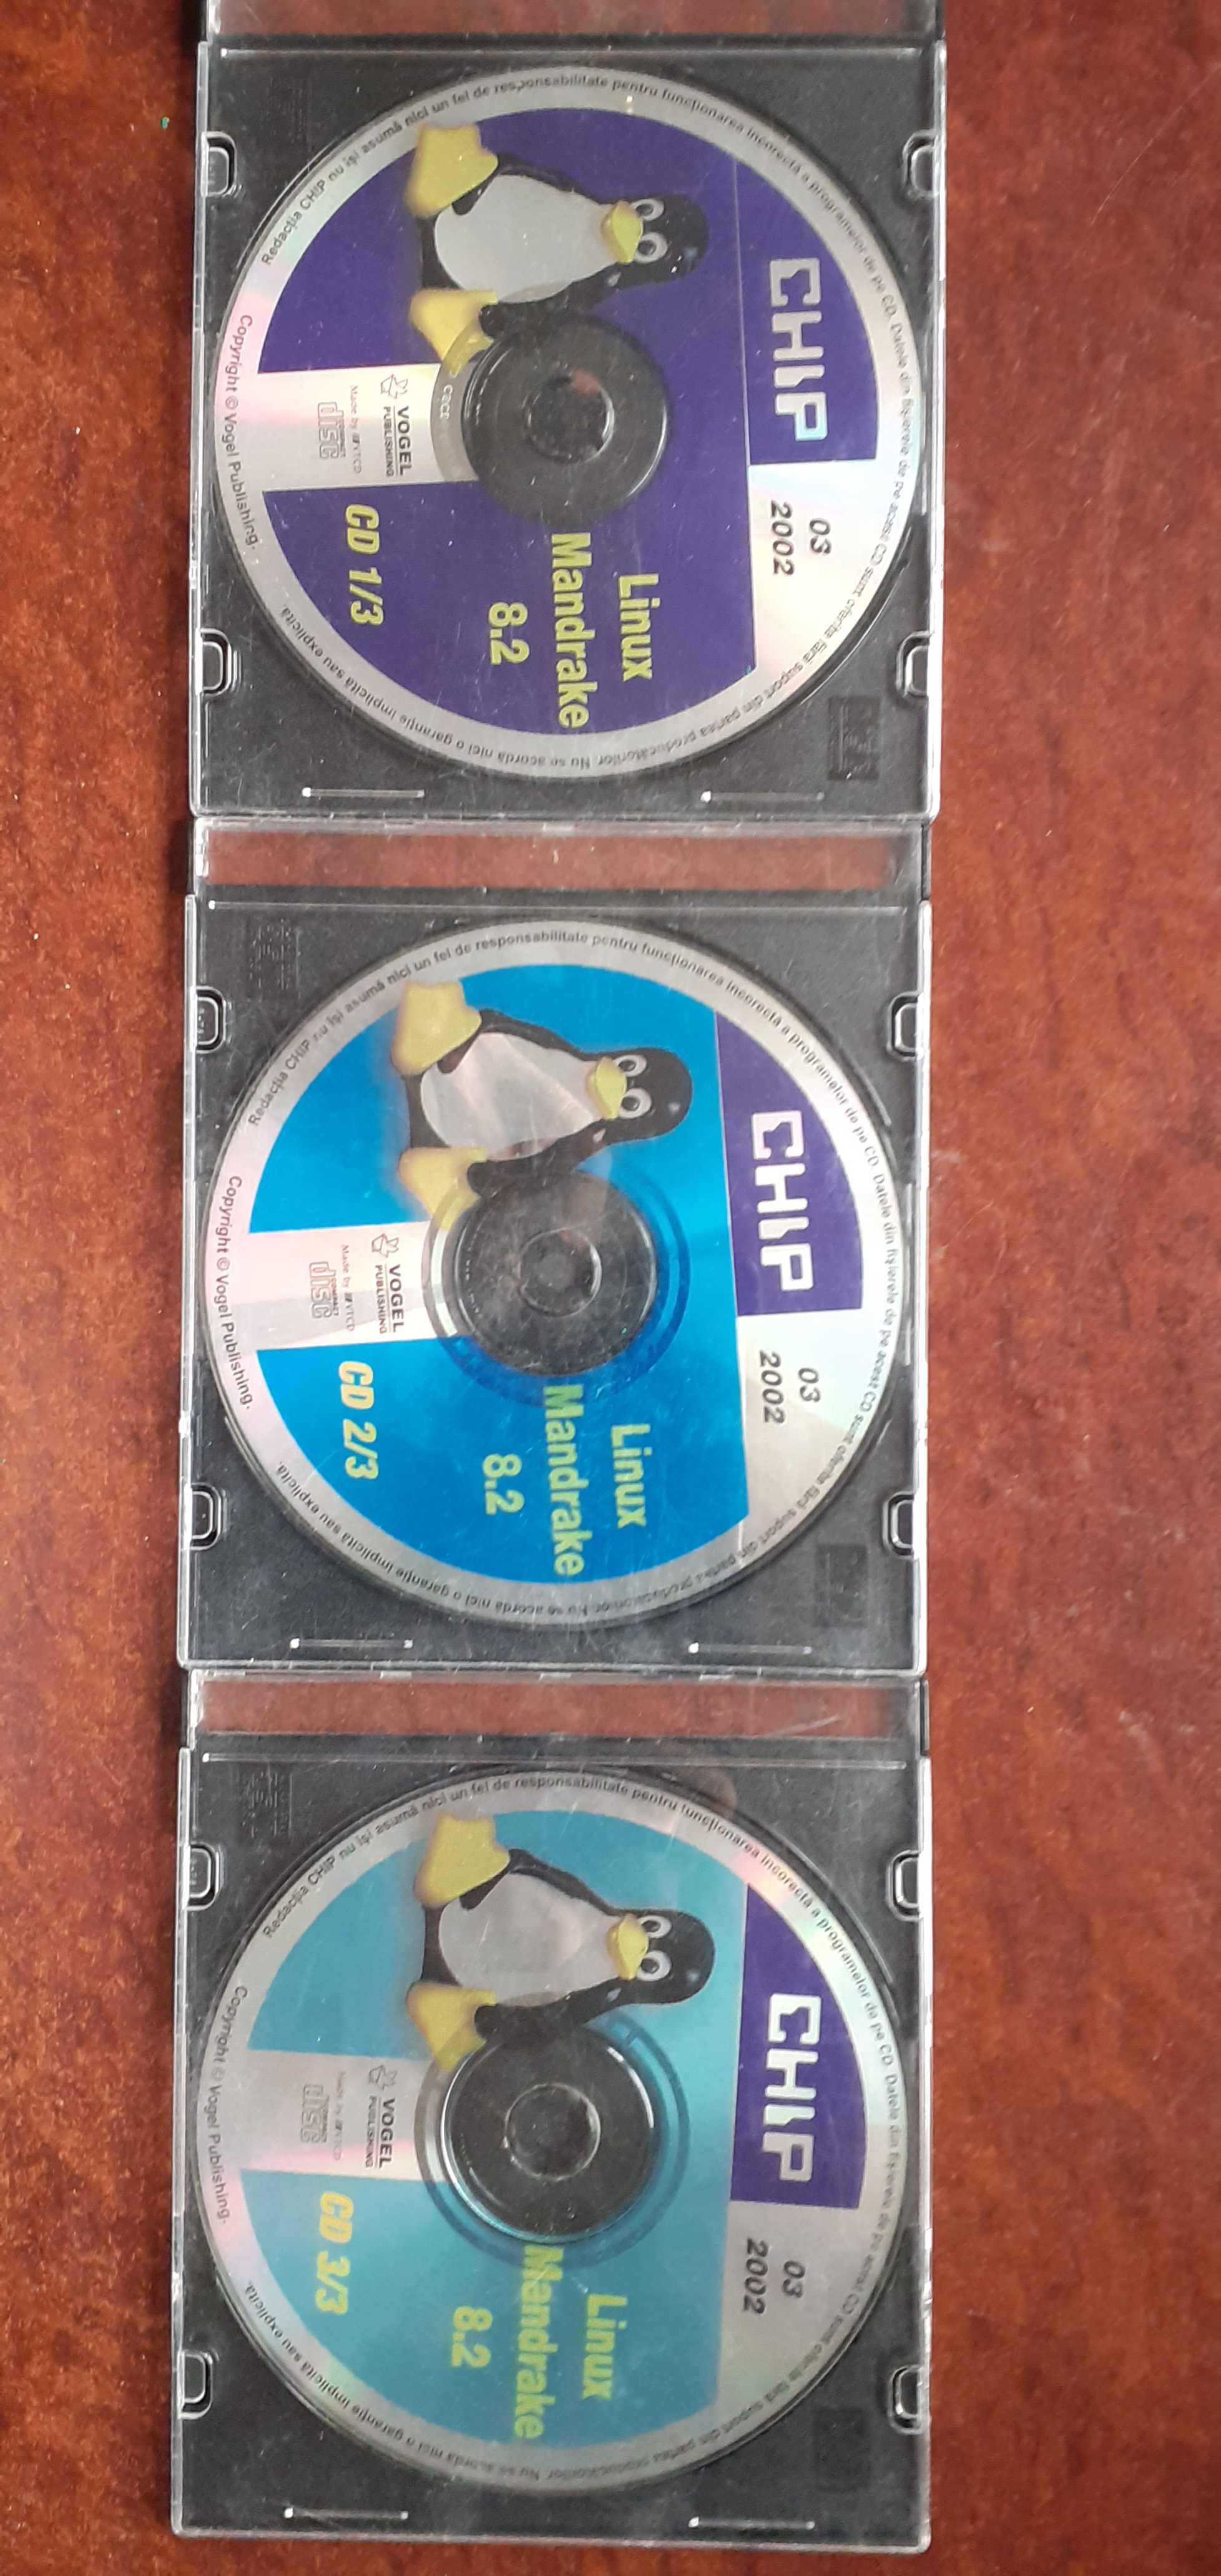 CD-uri soft Linux Mandrake 8.2 si RedHaT 8.0